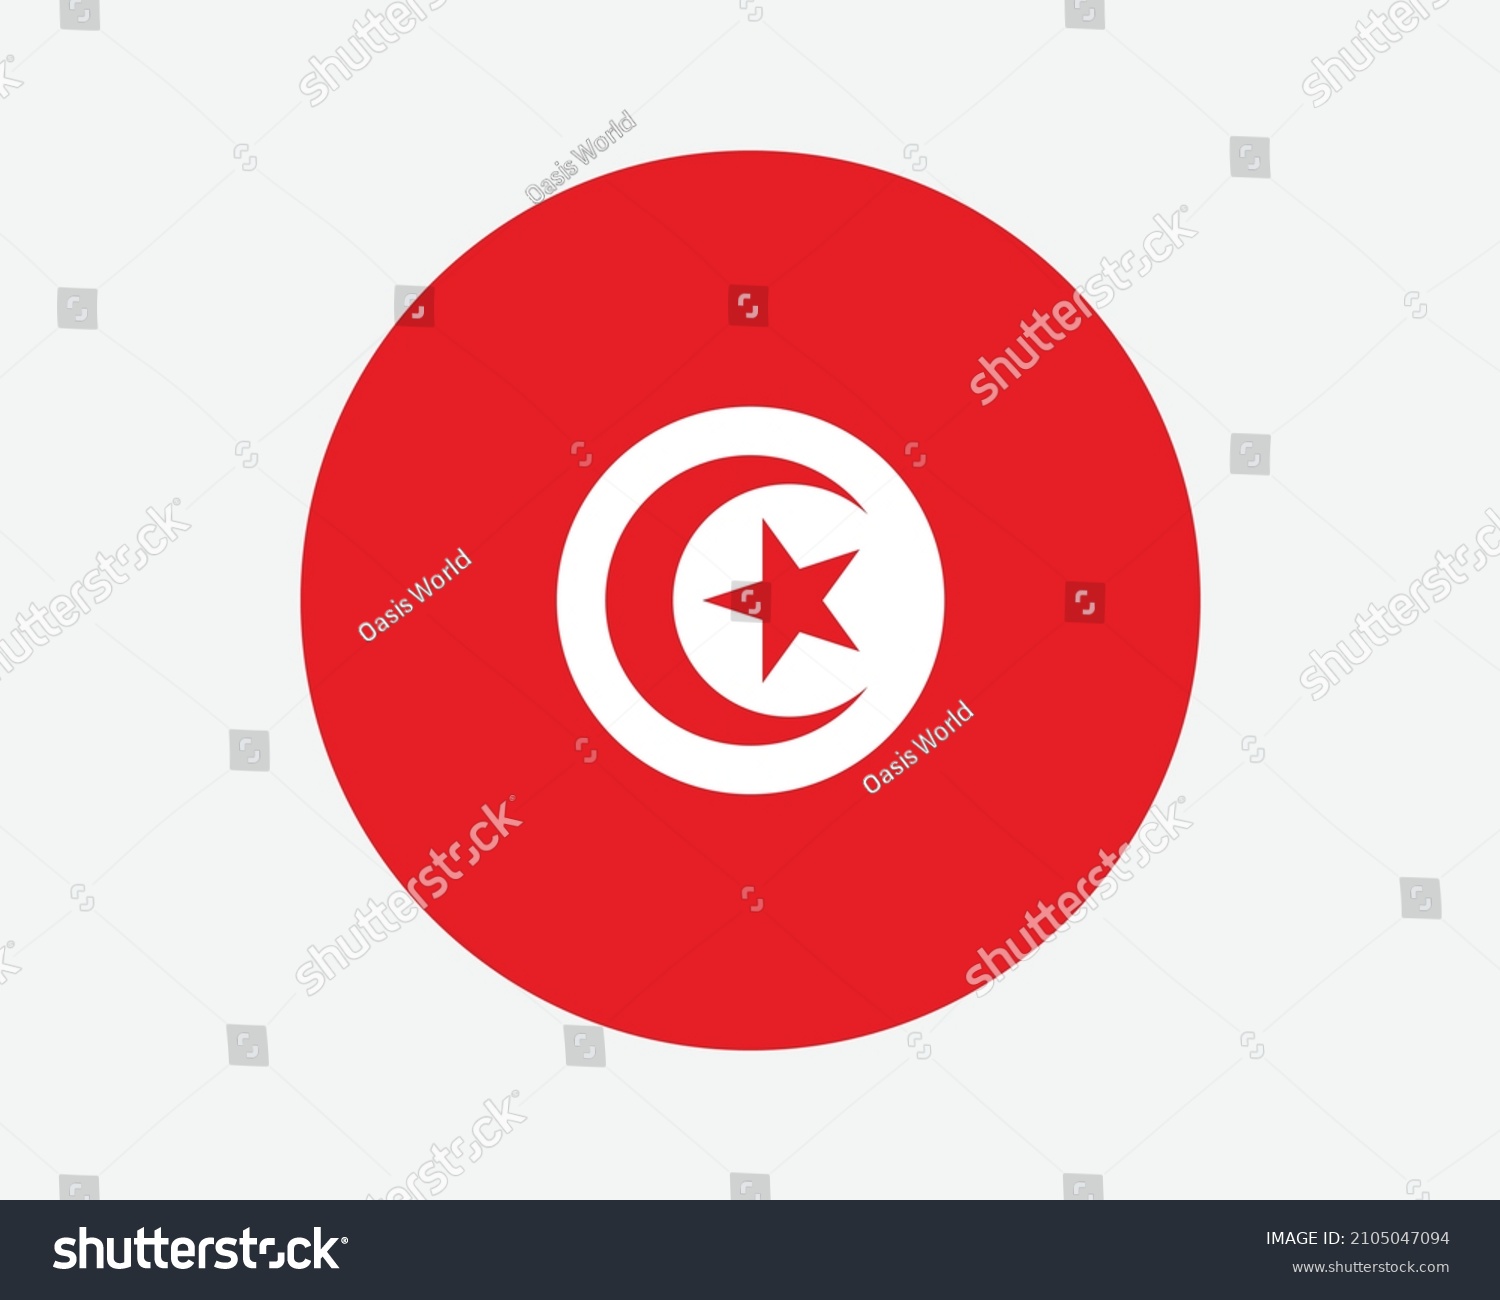 SVG of Tunisia Round Country Flag. Tunisian Circle National Flag. Republic of Tunisia Circular Shape Button Banner. EPS Vector Illustration. svg